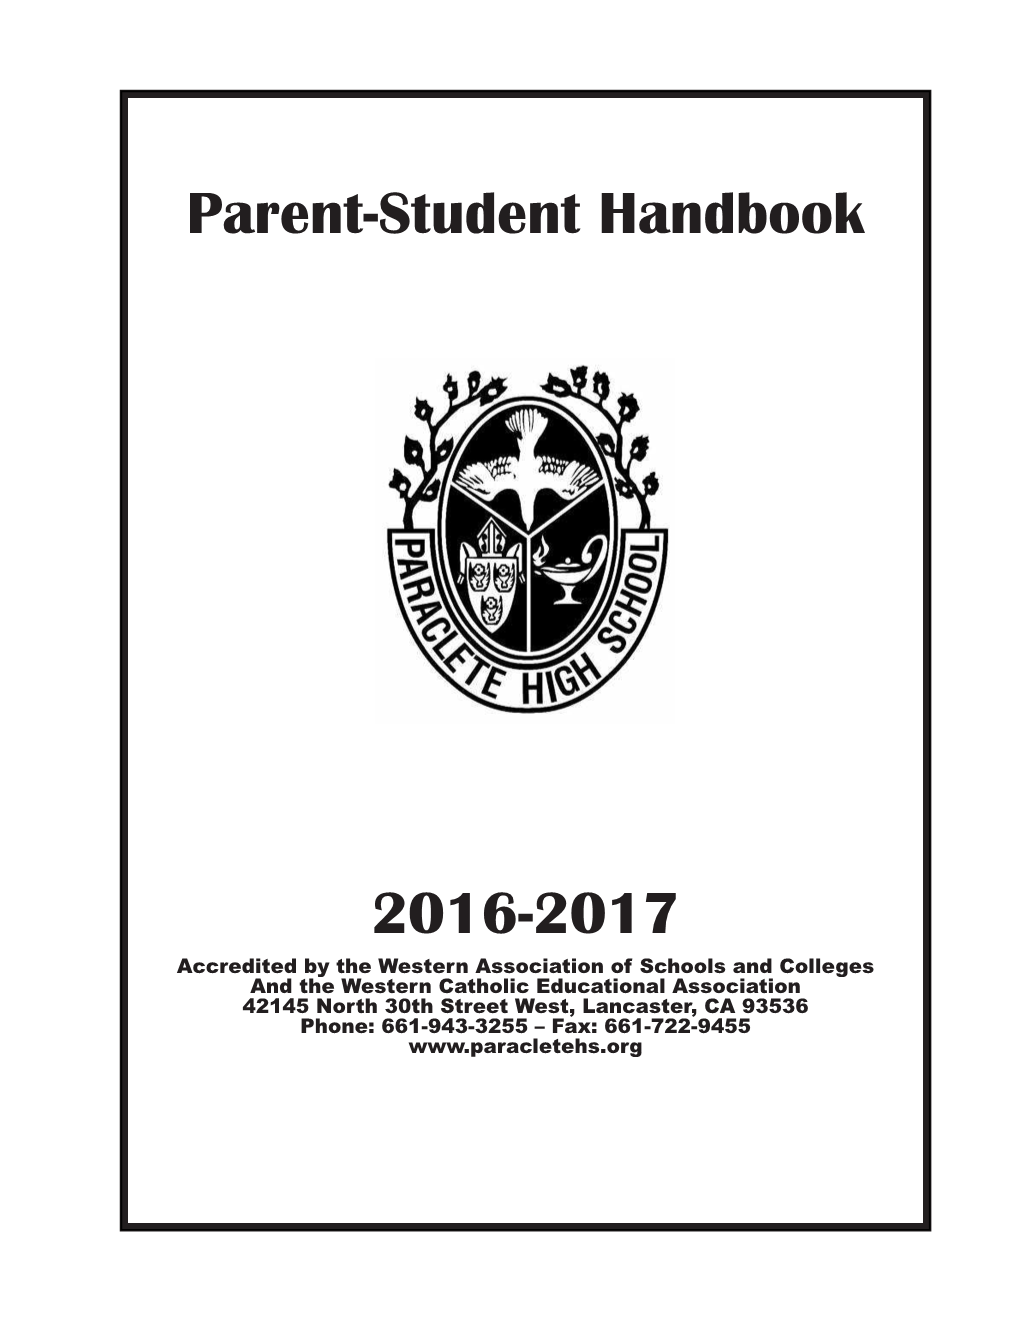 Parent-Student Handbook 2016-2017